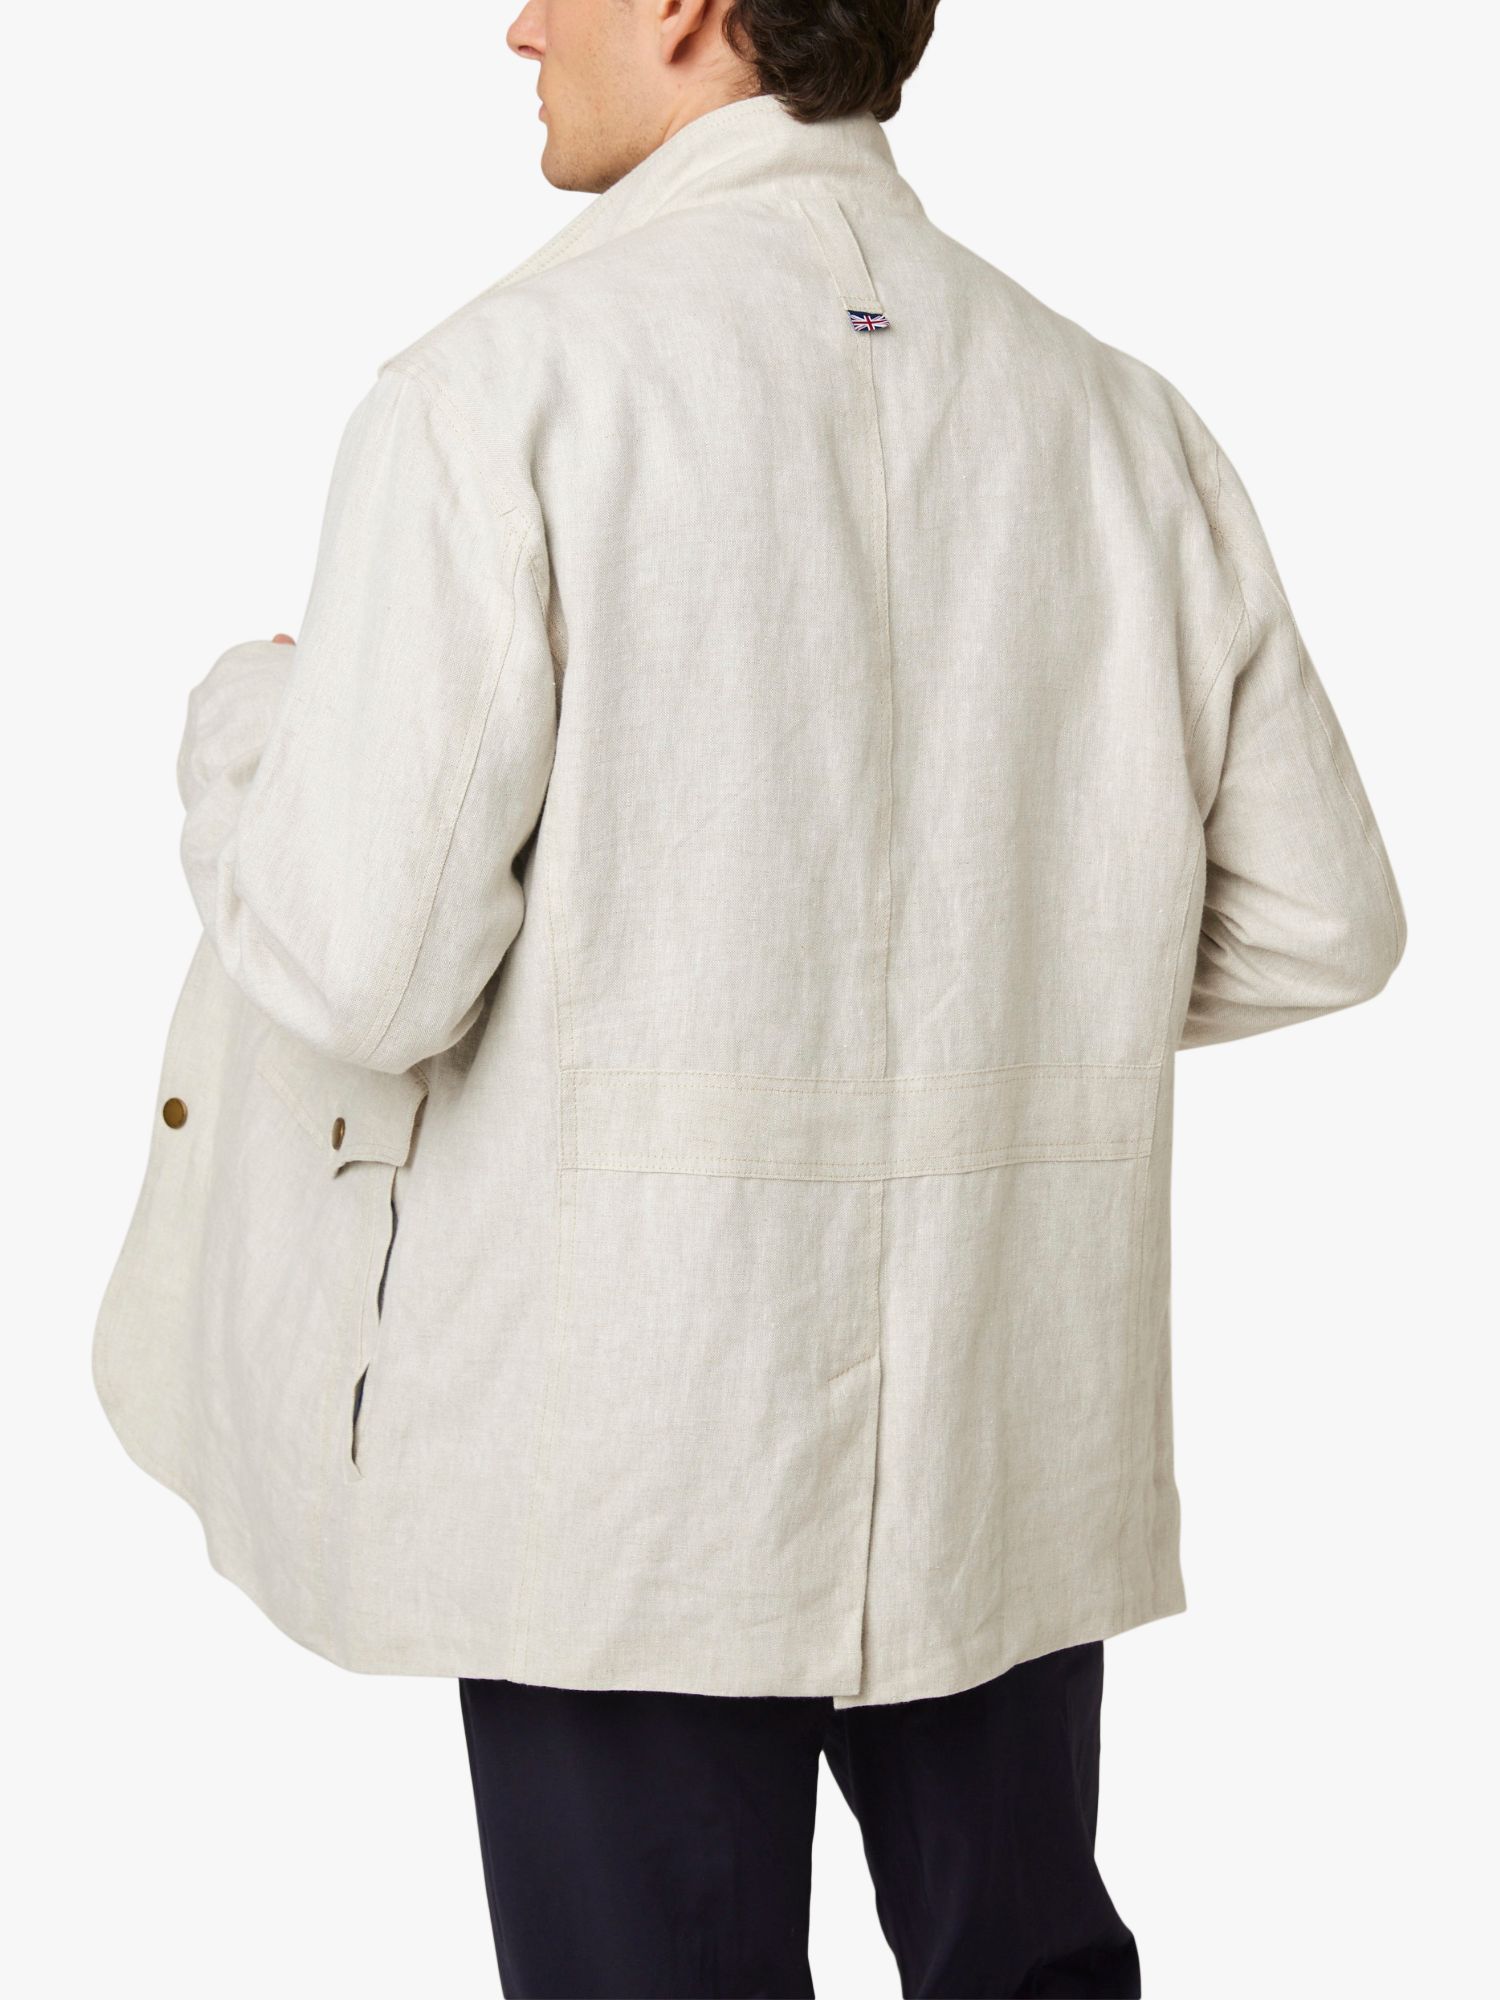 Peregrine Malvern Linen Jacket, Natural, S